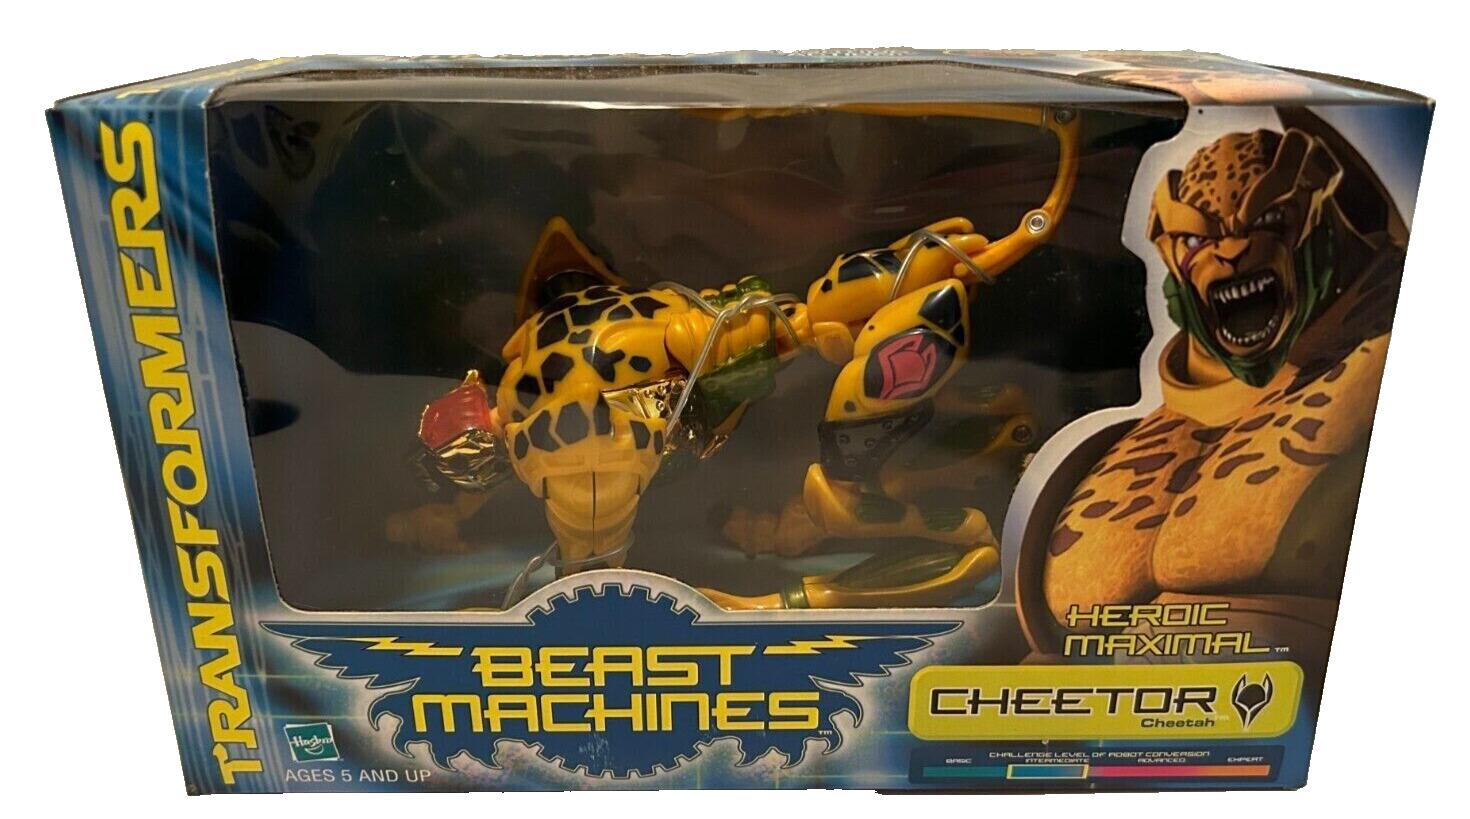 1999 Hasbro Transformers Beast Machines Heroic Maximal   CHEETOR  MIB  MISB